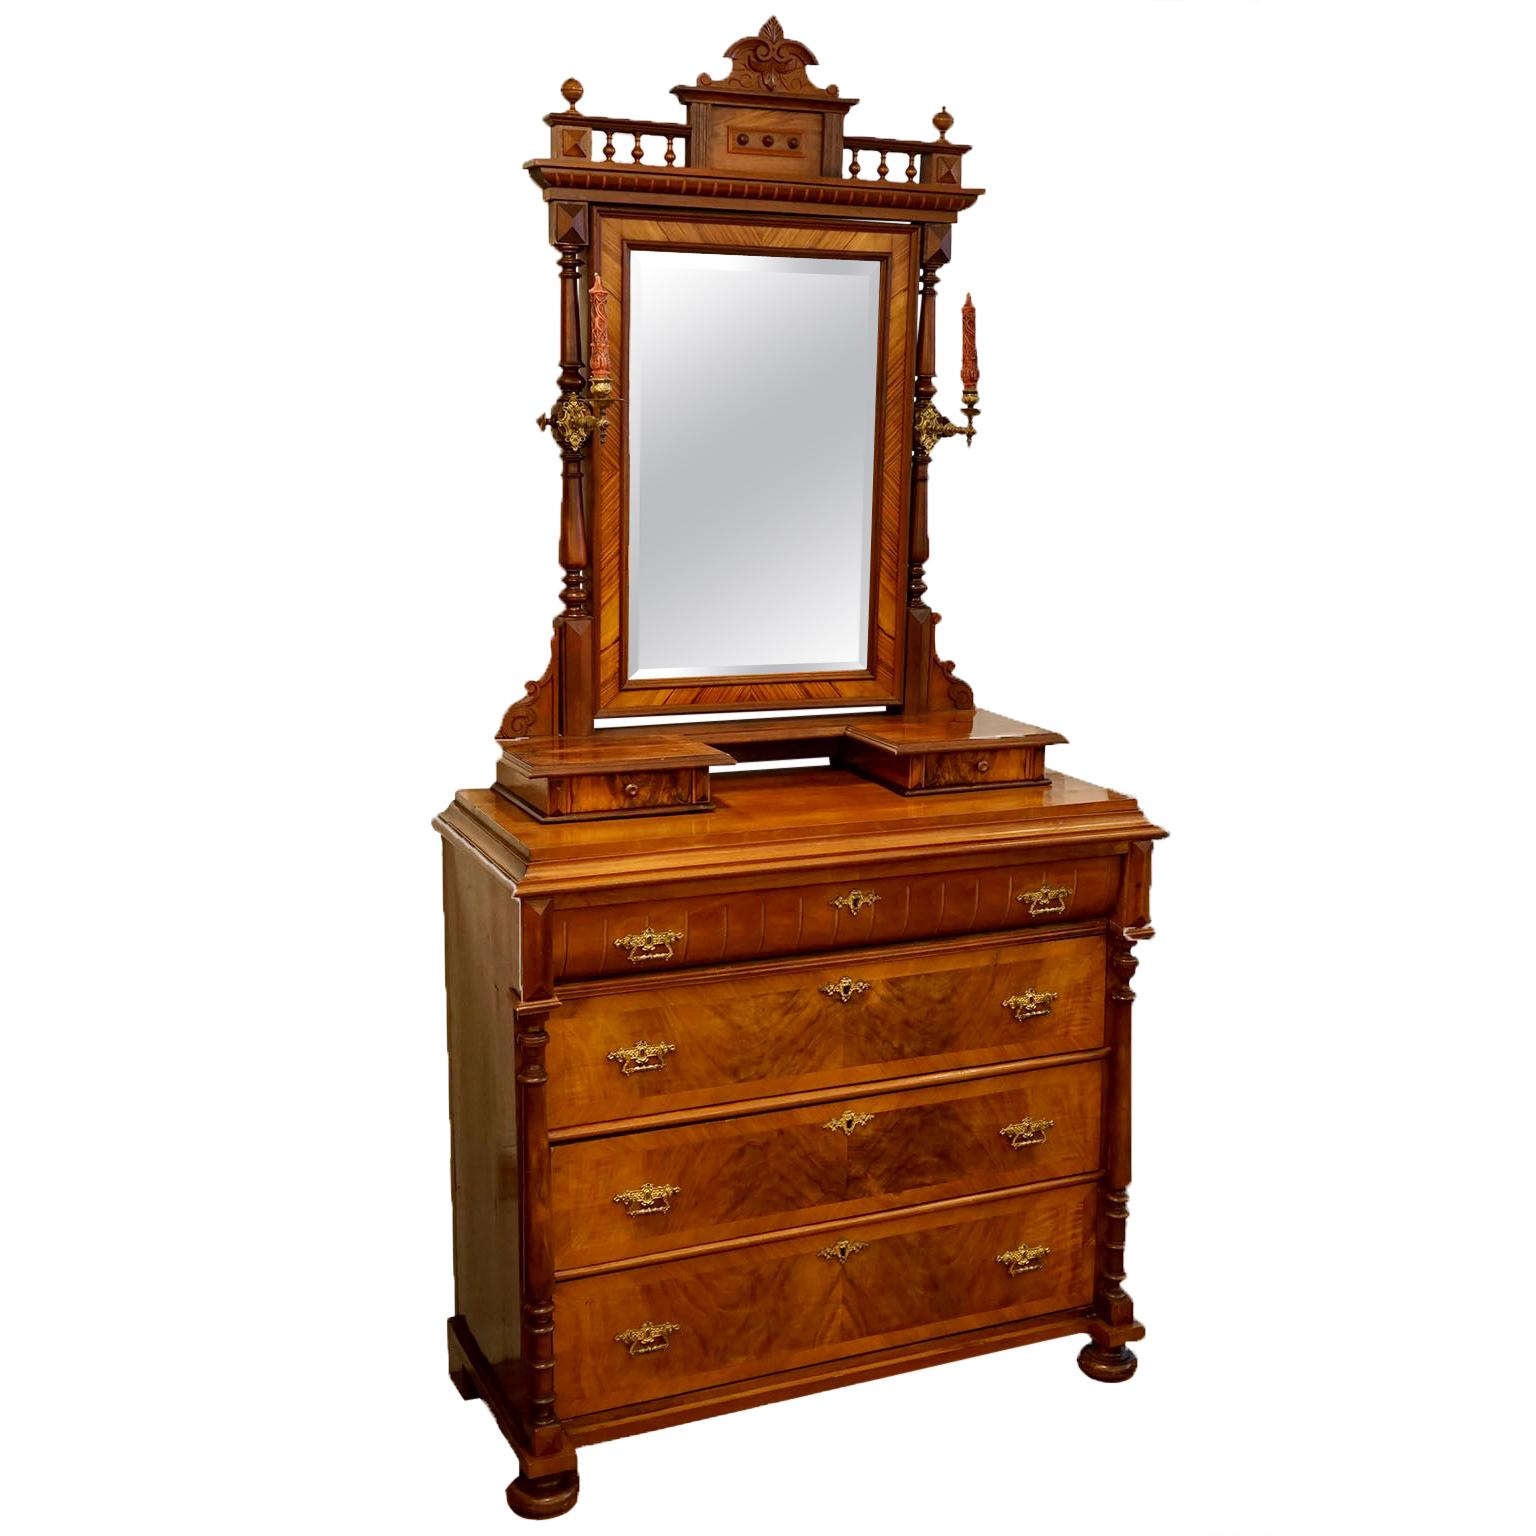 Renaissance Revival Dresser with Vanity Mirror